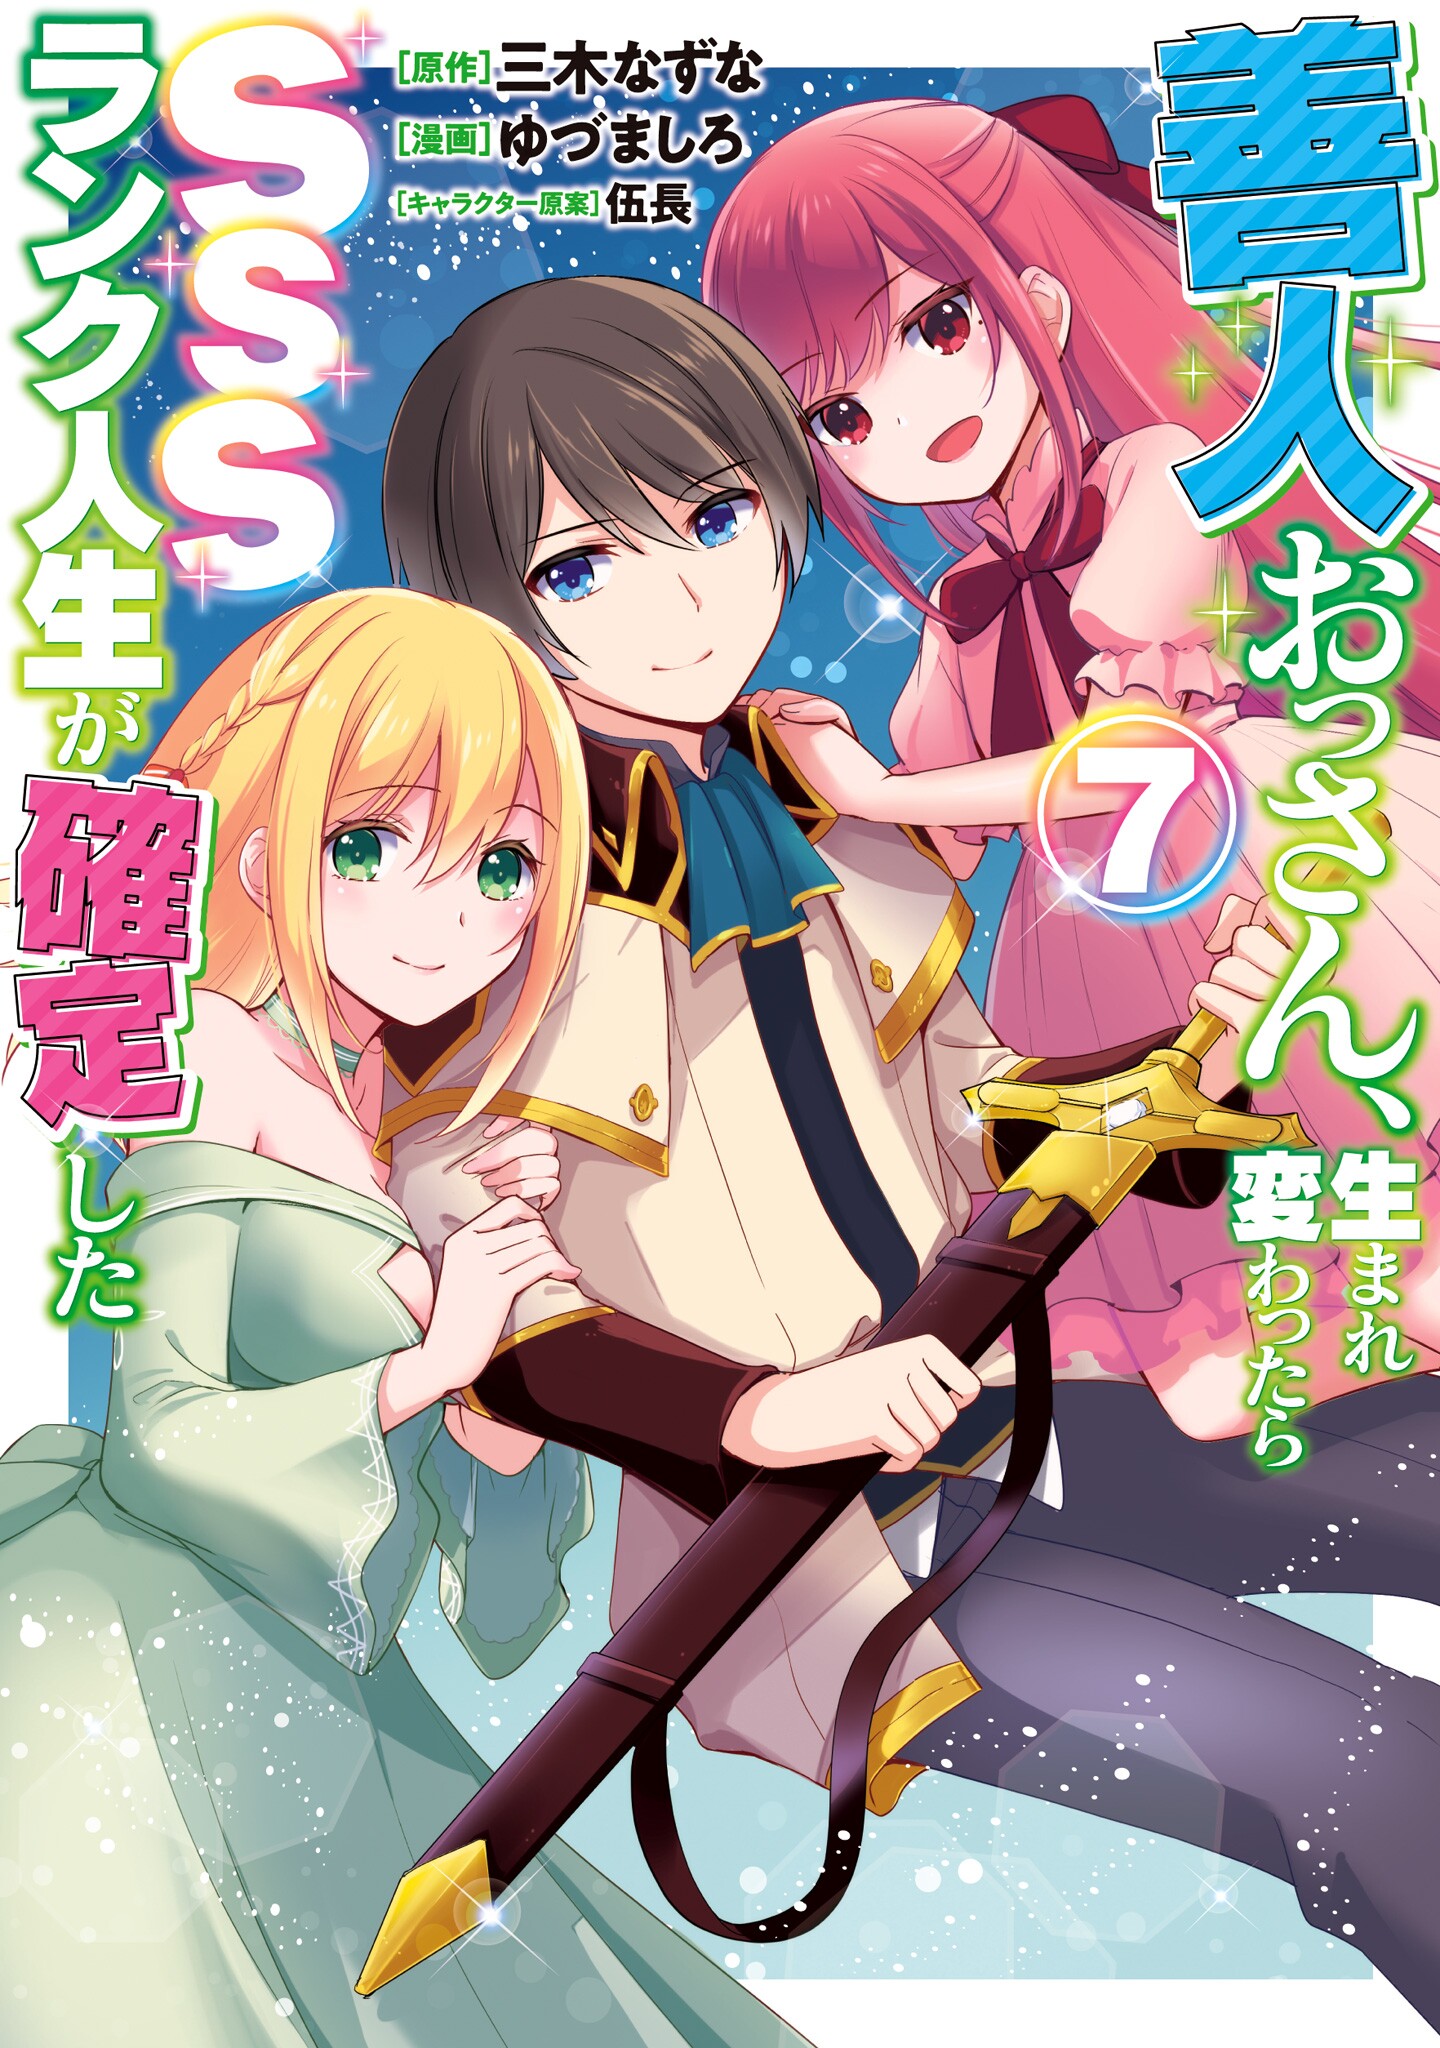 Read Rakudai Kishi No Eiyuutan Chapter 26 : Messenger From The Other Side  on Mangakakalot